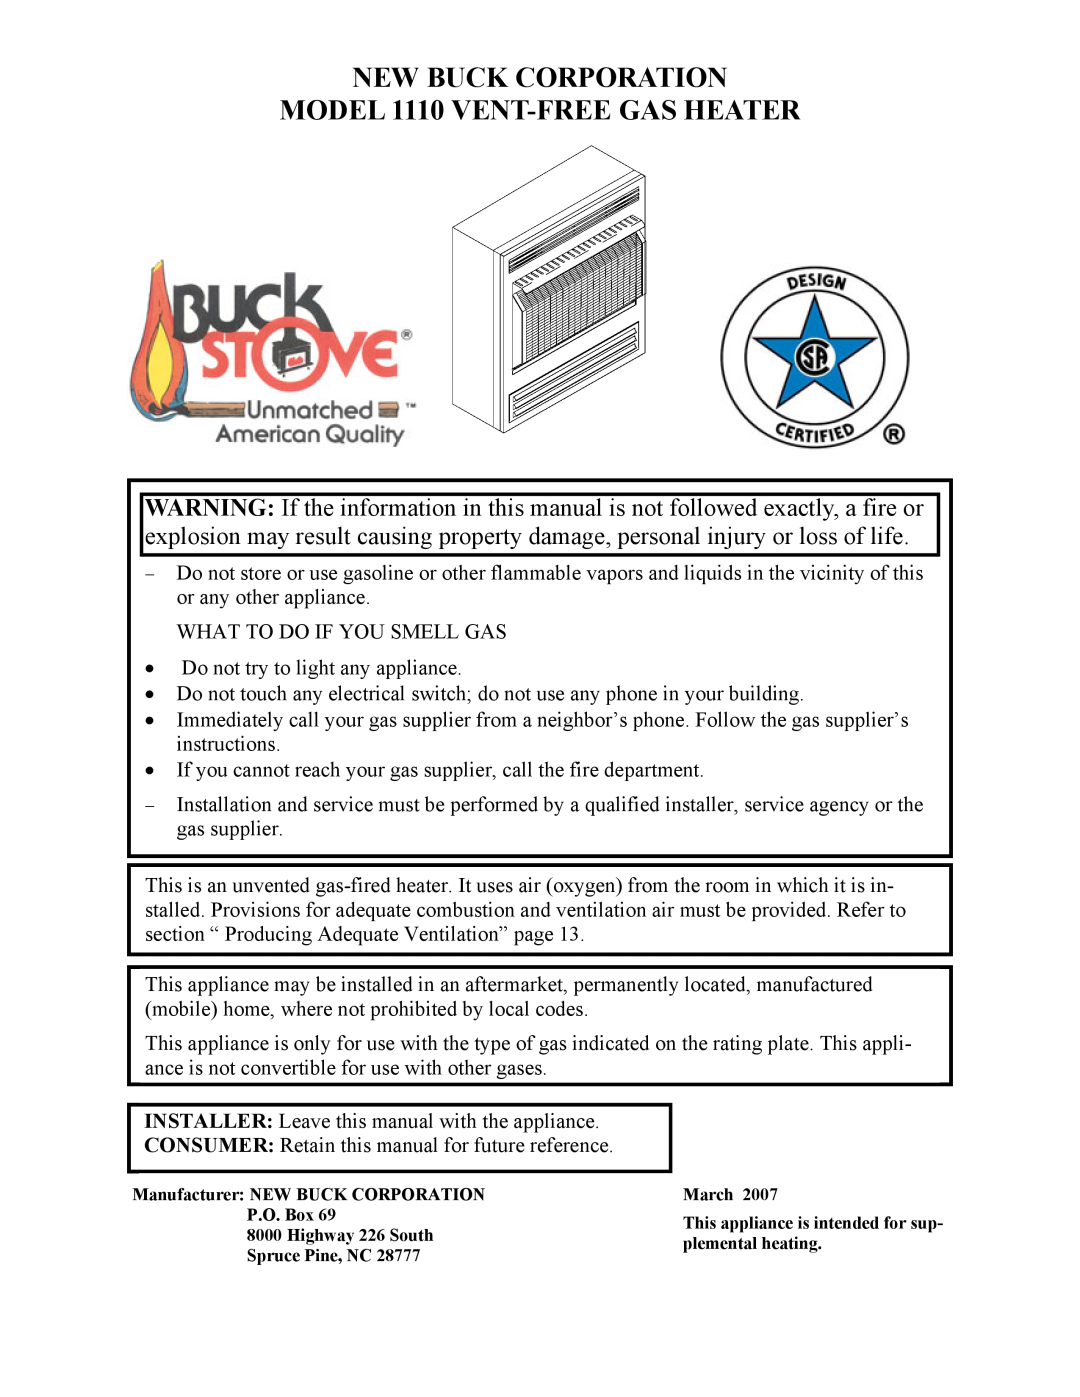 New Buck Corporation manual New Buck Corporation, MODEL 1110 VENT-FREEGAS HEATER, Highway 226 South Spruce Pine, NC 